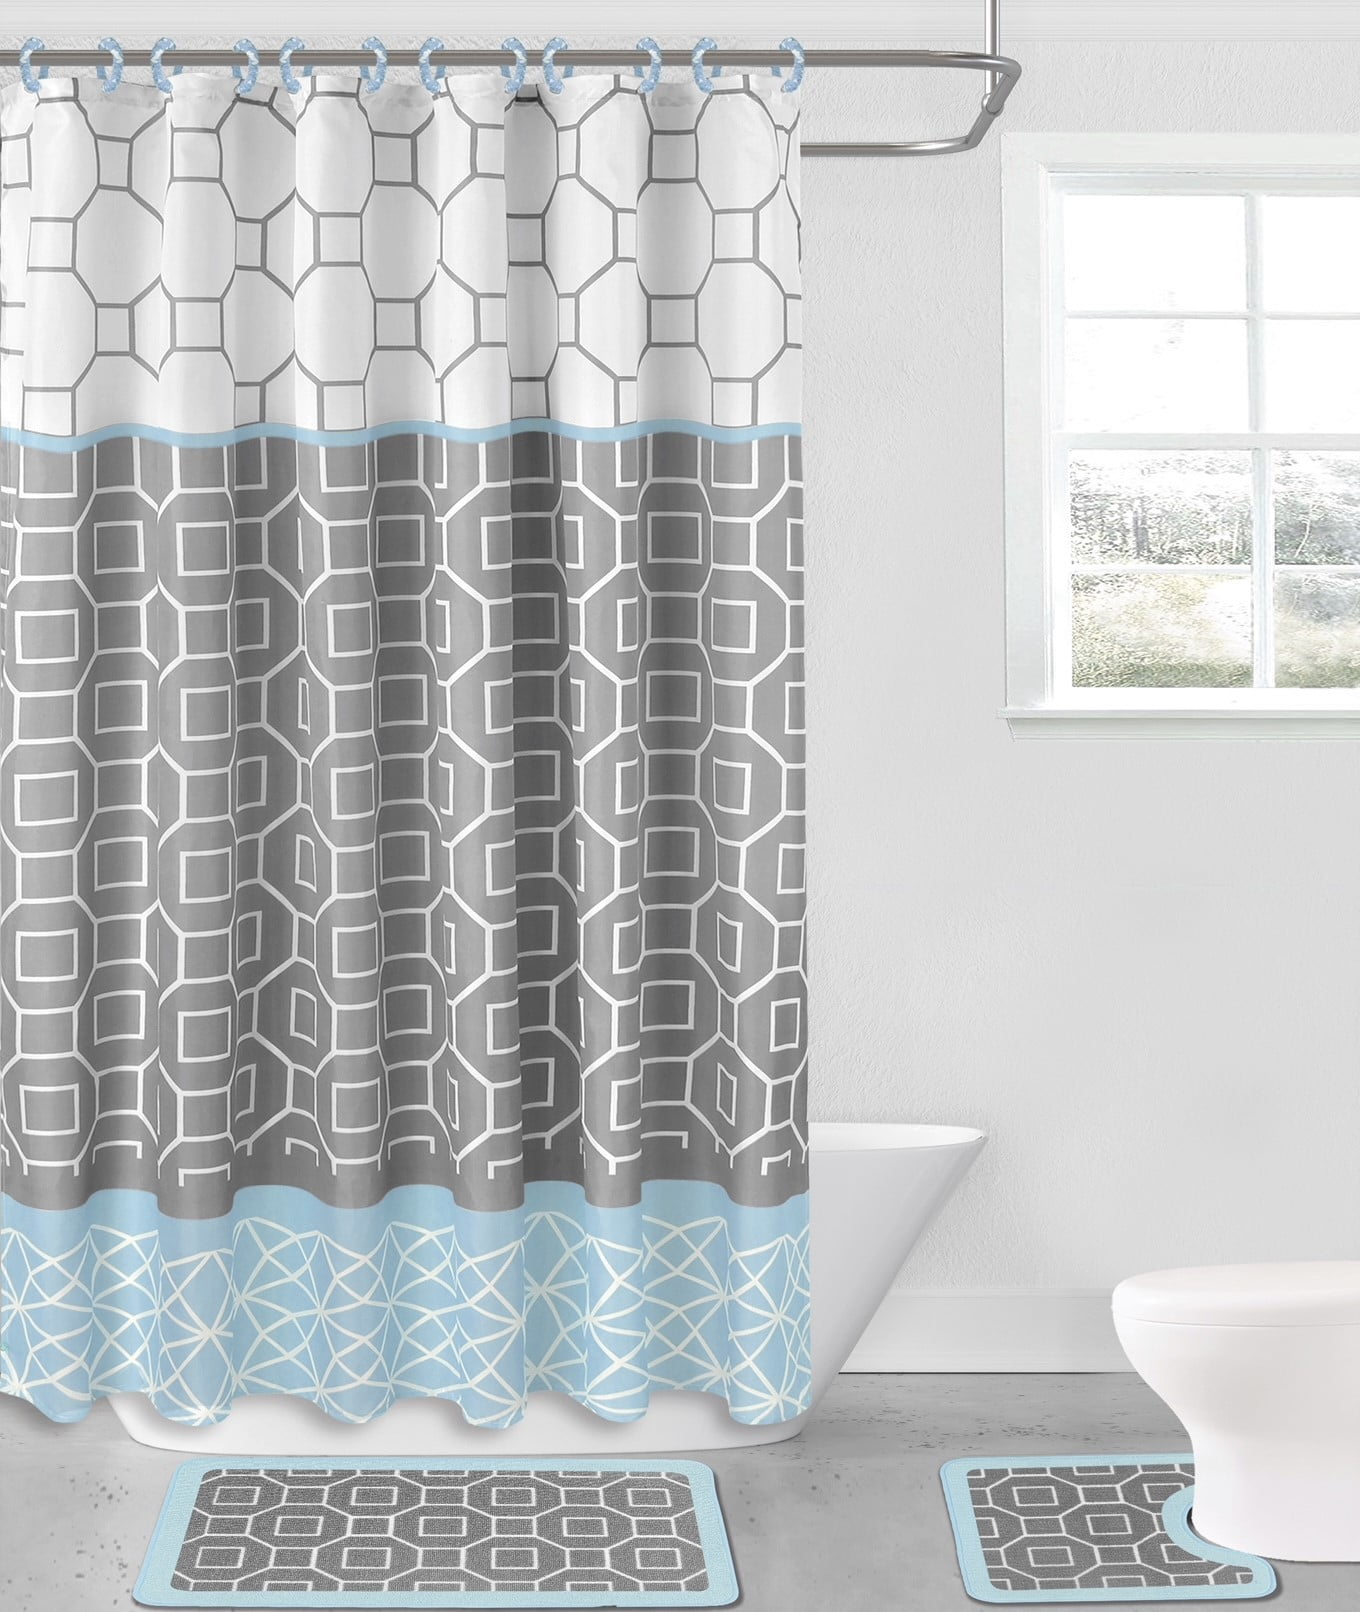 Details about    Leisurely Dog Bath Shower Curtain Mat Set Waterproof Bathroom Fabric w/12 Hooks 